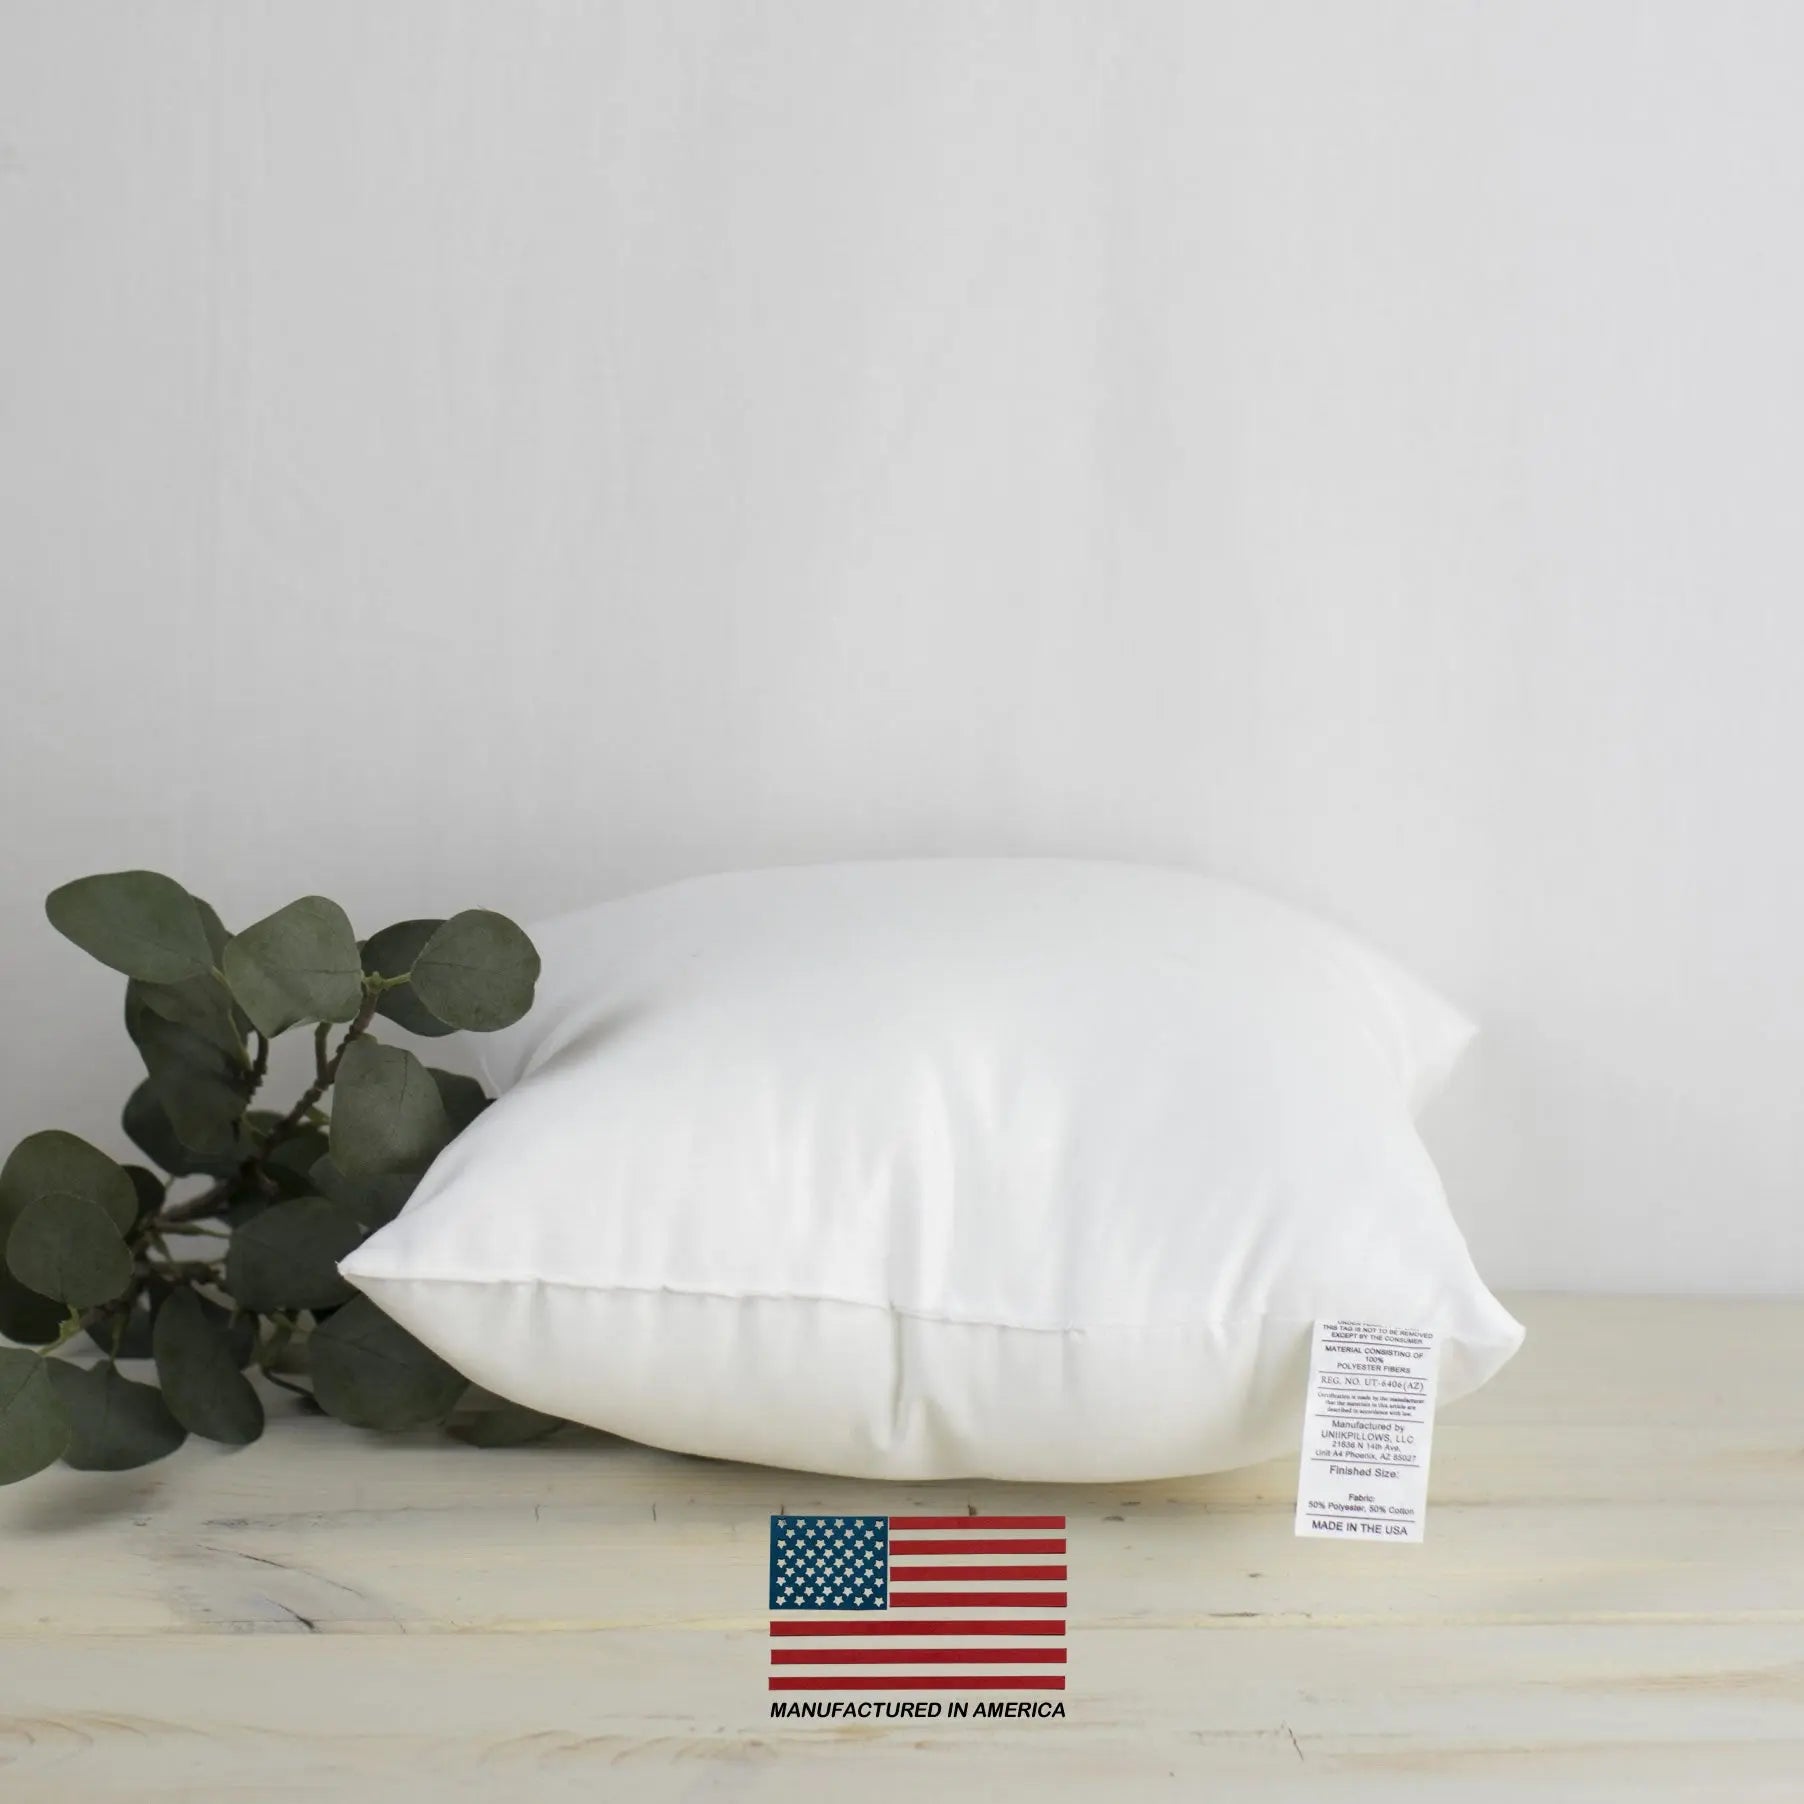 20x20, Indoor Outdoor Hypoallergenic Polyester Pillow Insert, Quality  Insert, Pillow Inners, Throw Pillow Insert